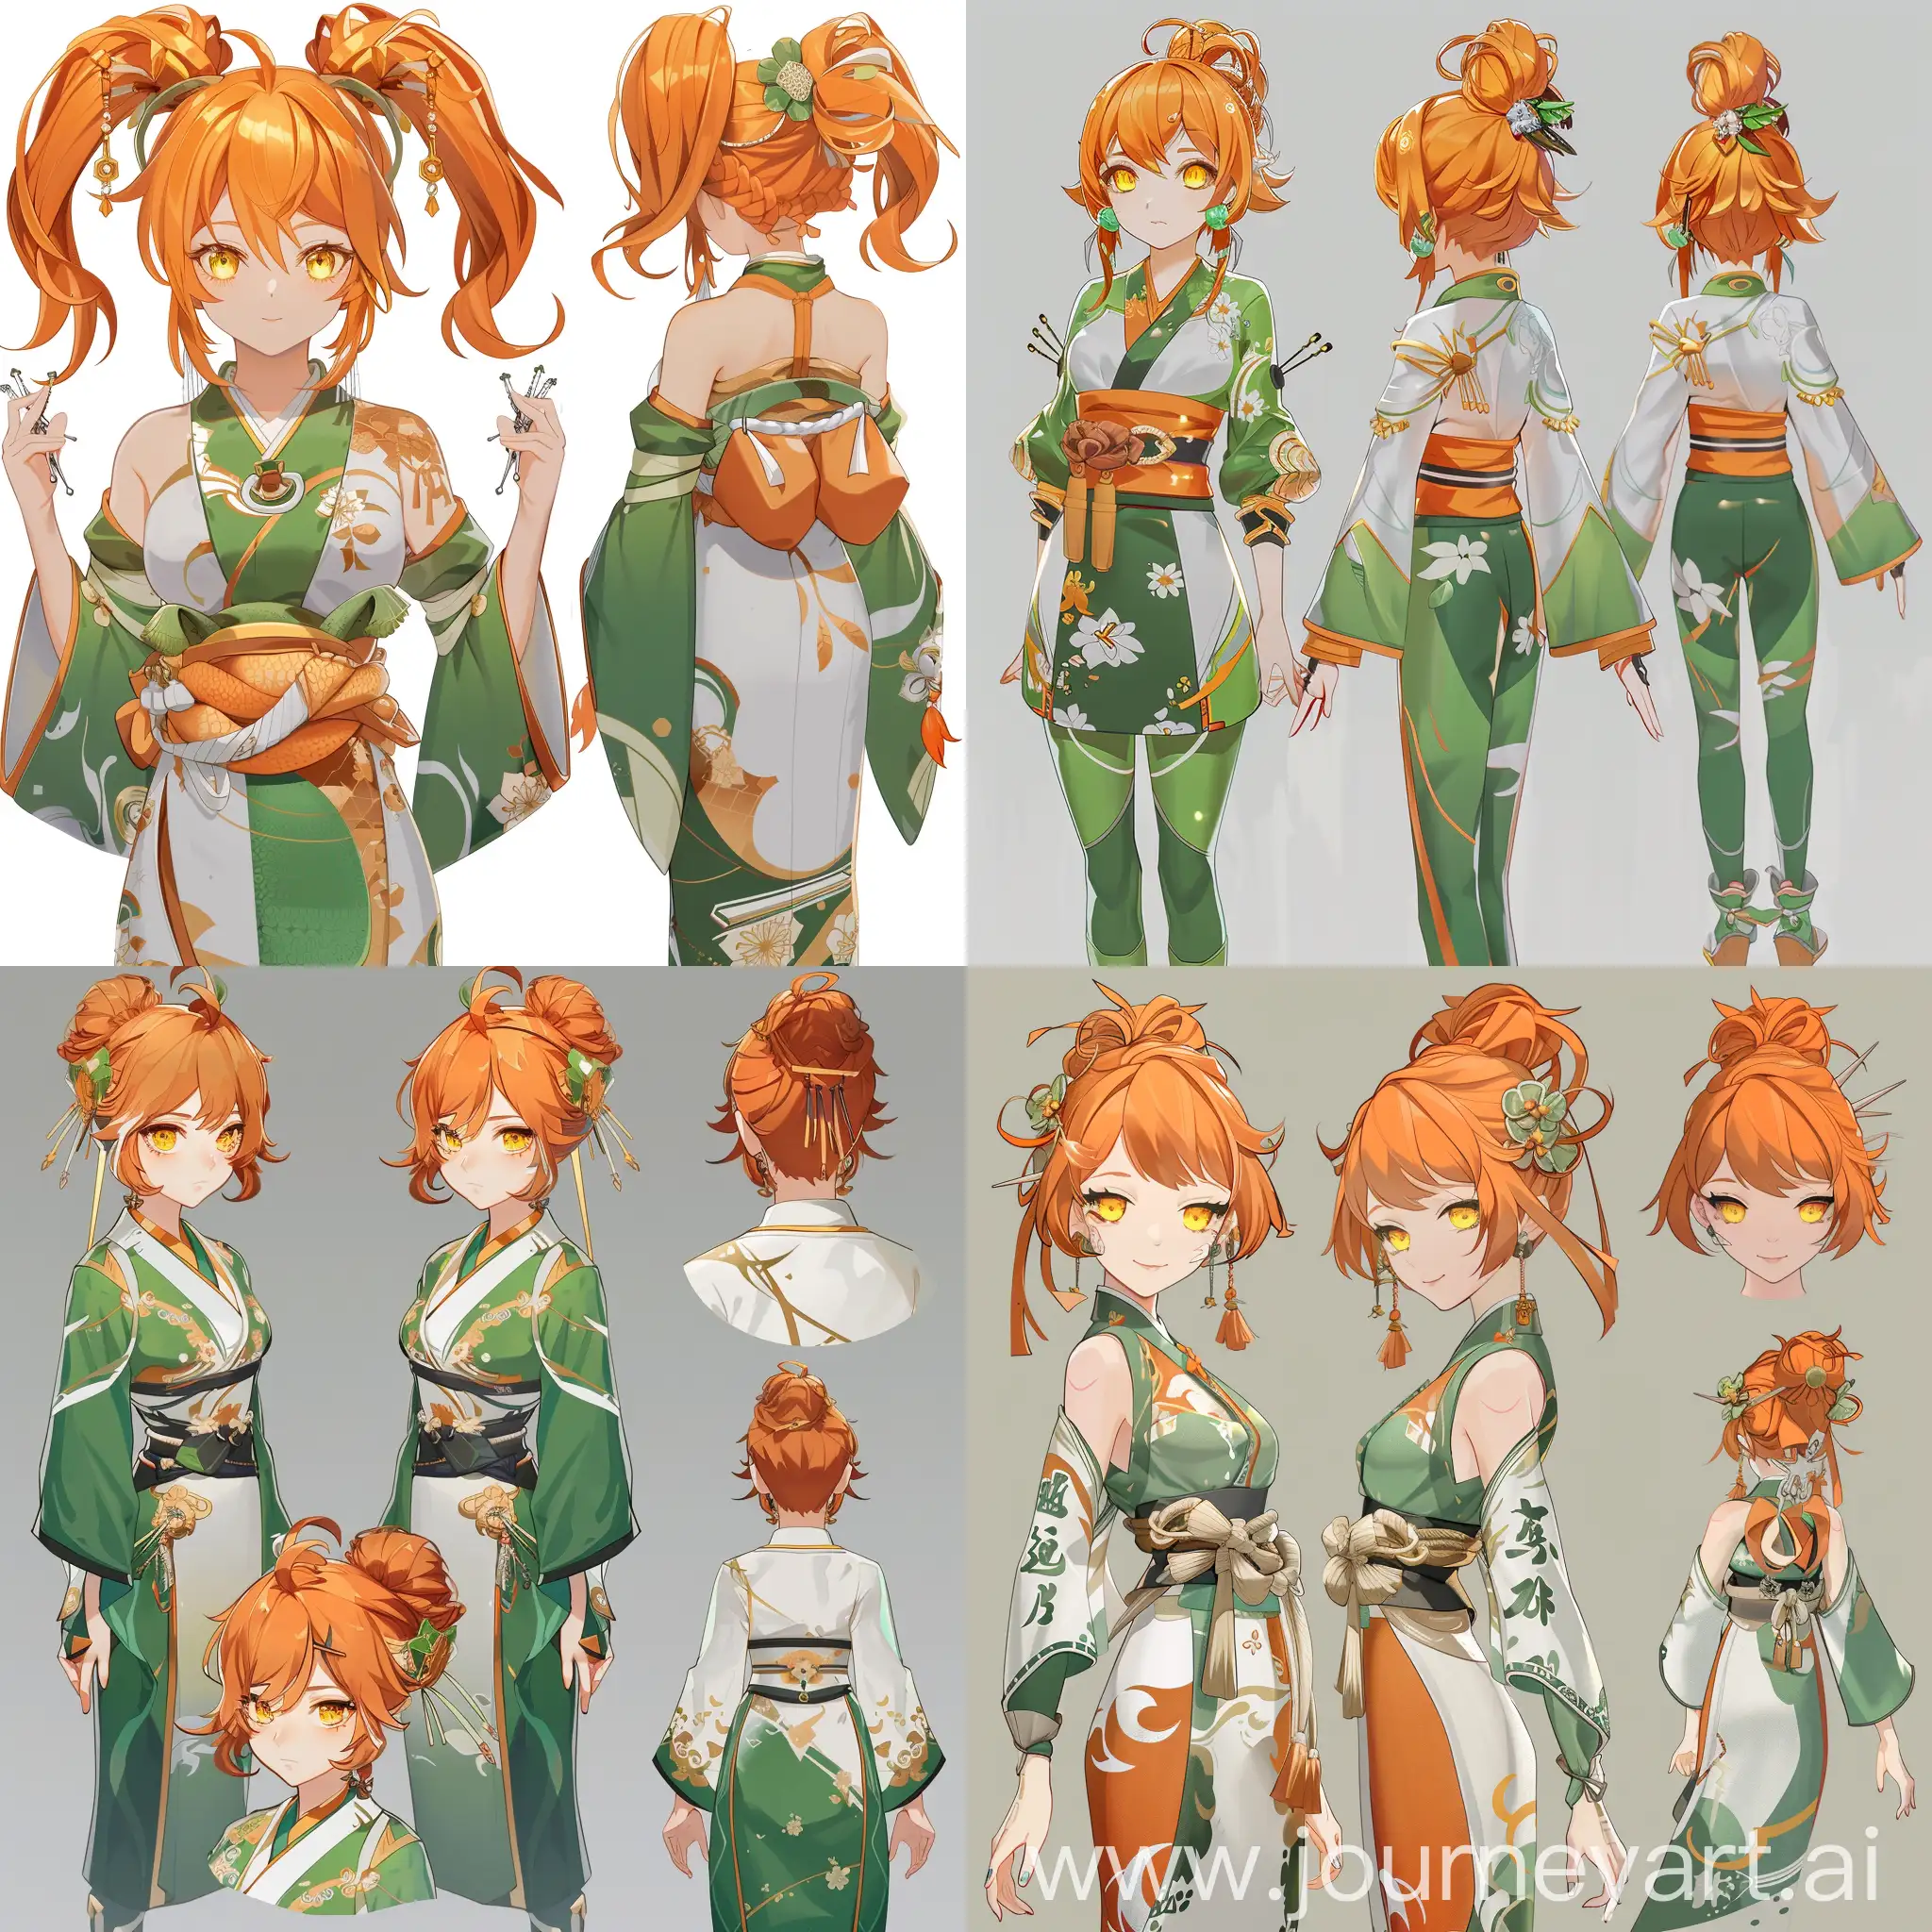 OrangeHaired-Genshin-Impact-Character-in-Kimono-and-Hairpins